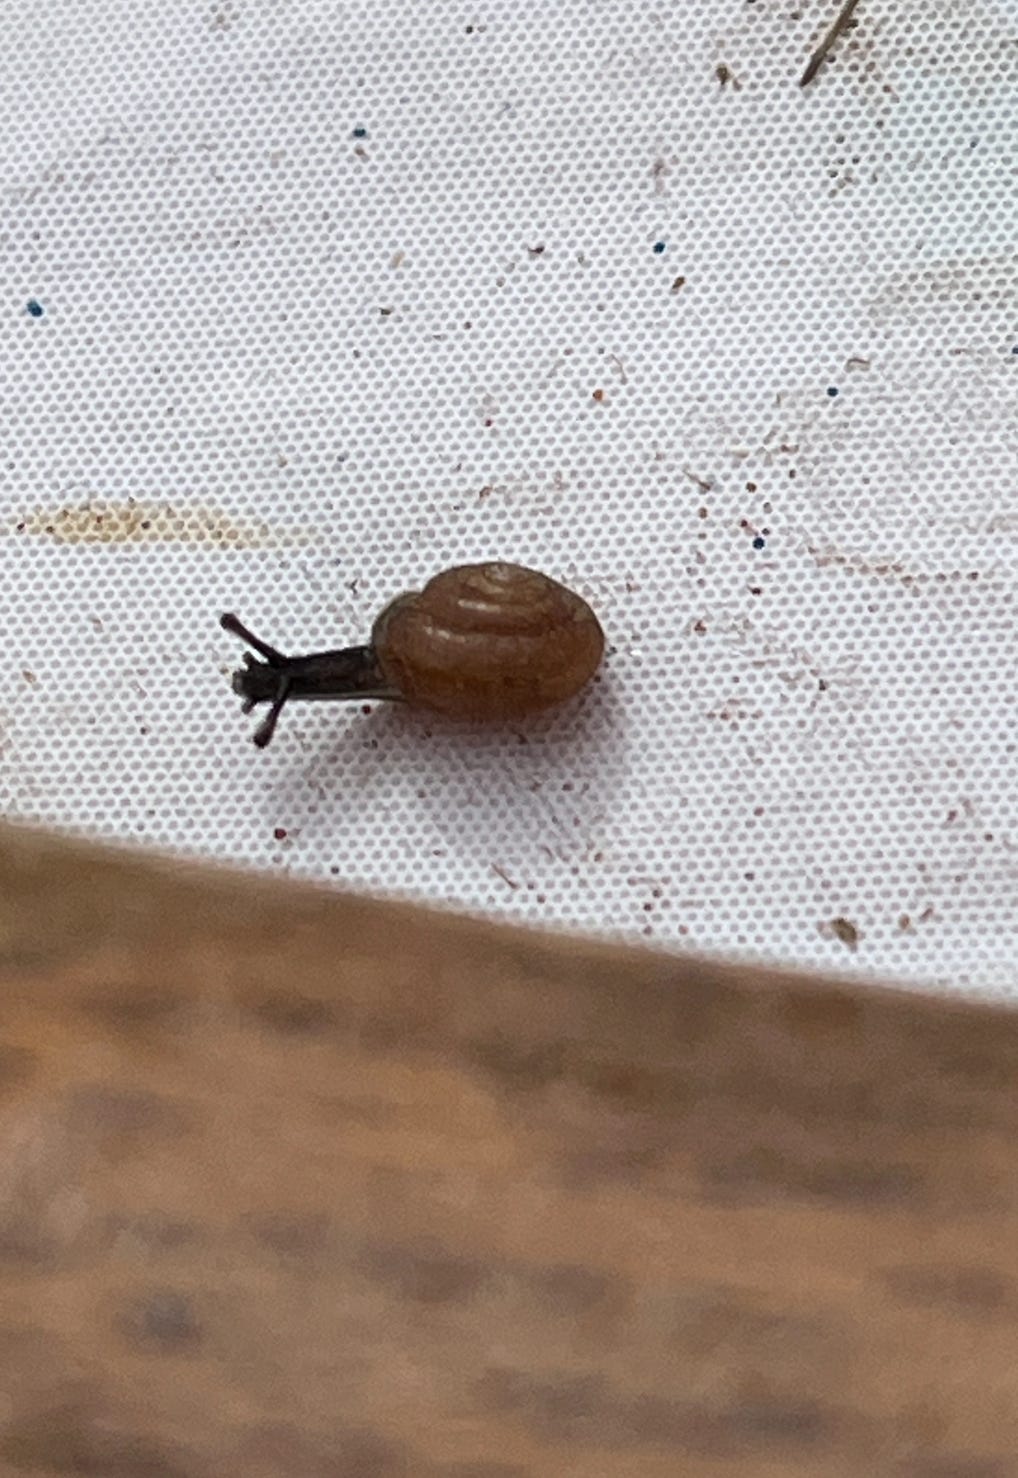 The snail, closer up